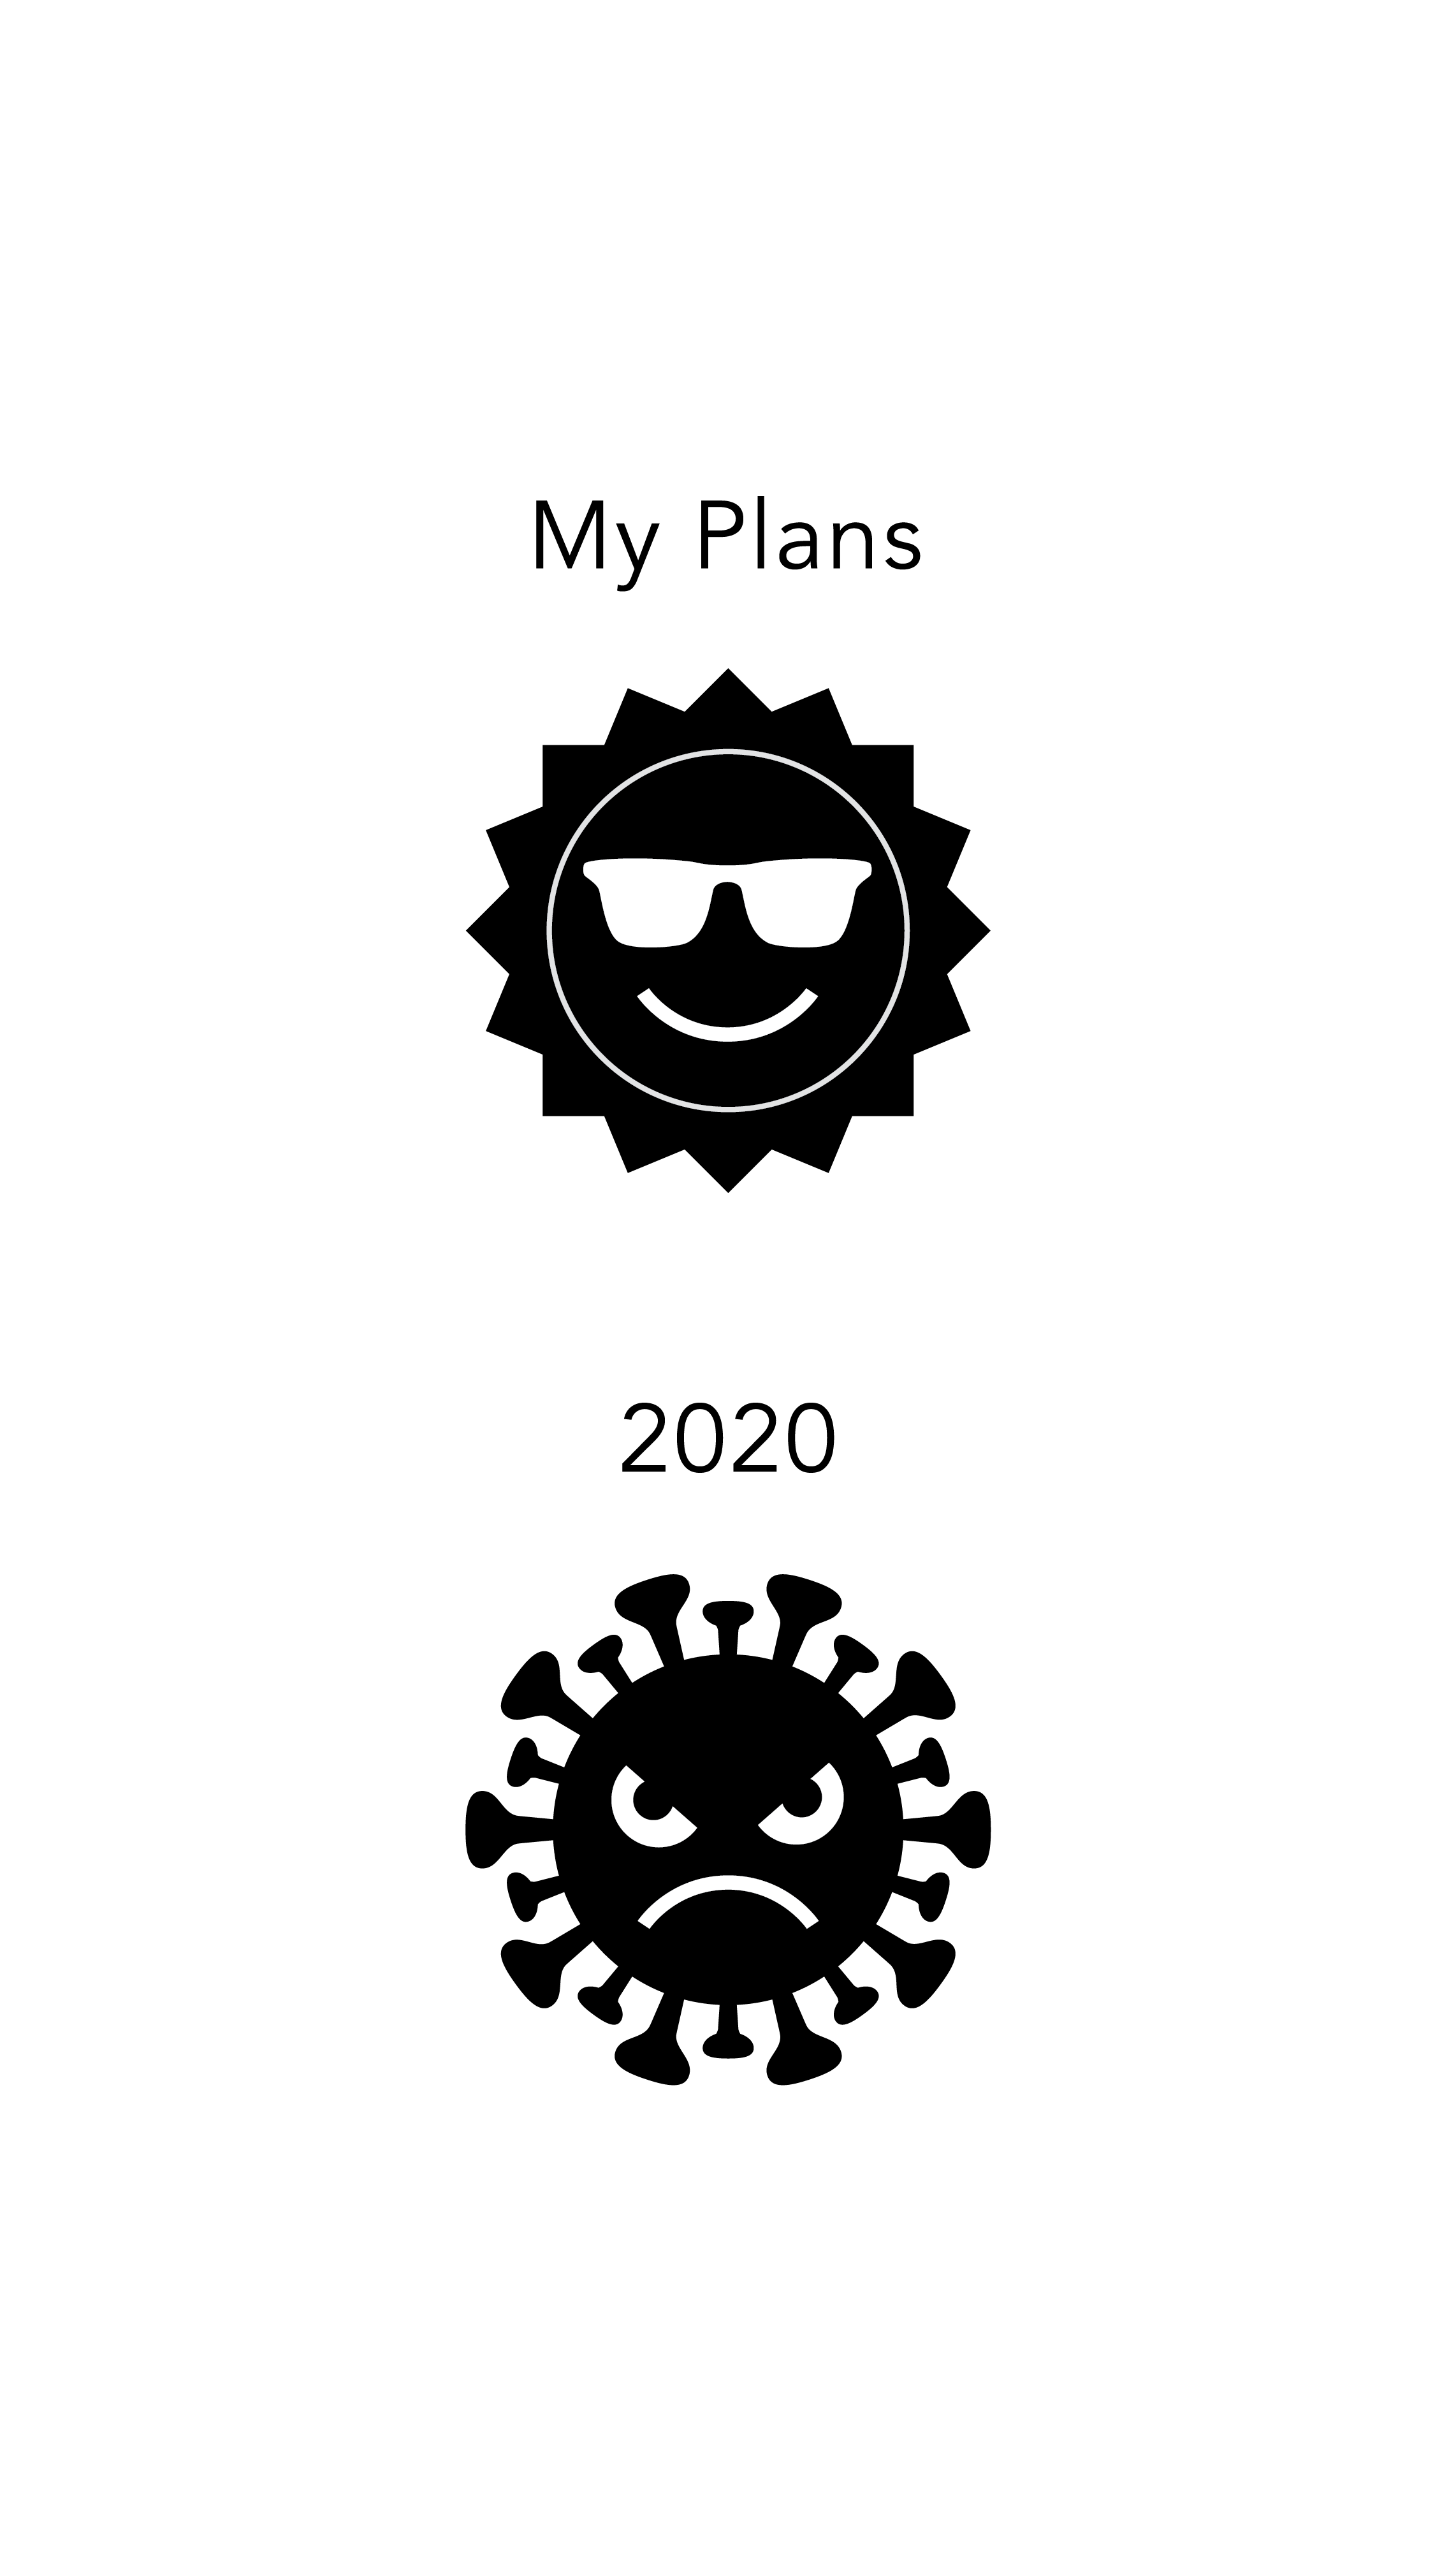 My Plans: sun with sunlgasses 2020: coronavirus frowning